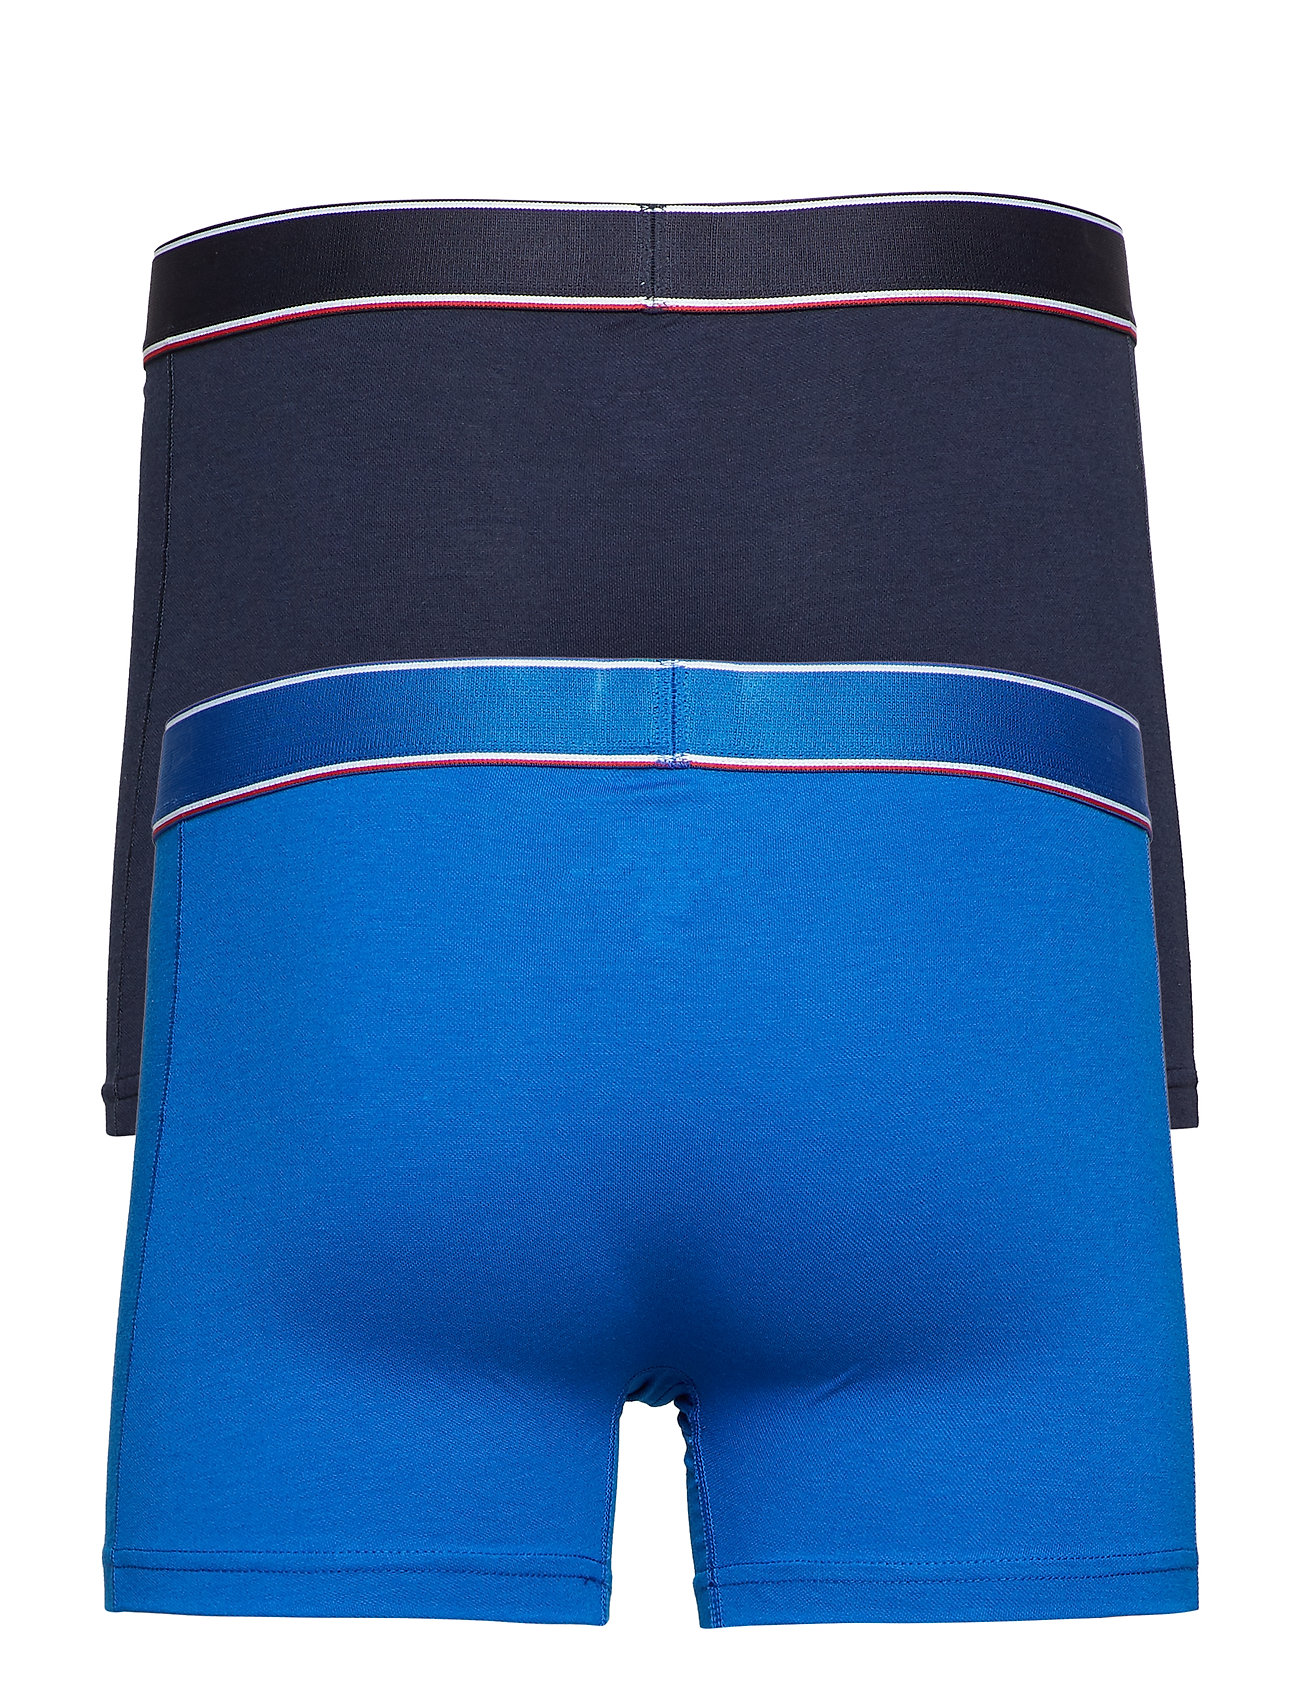 JBS of Denmark - JBS of Denmark, 2-pack pique - multipack underpants - navy/blue - 1